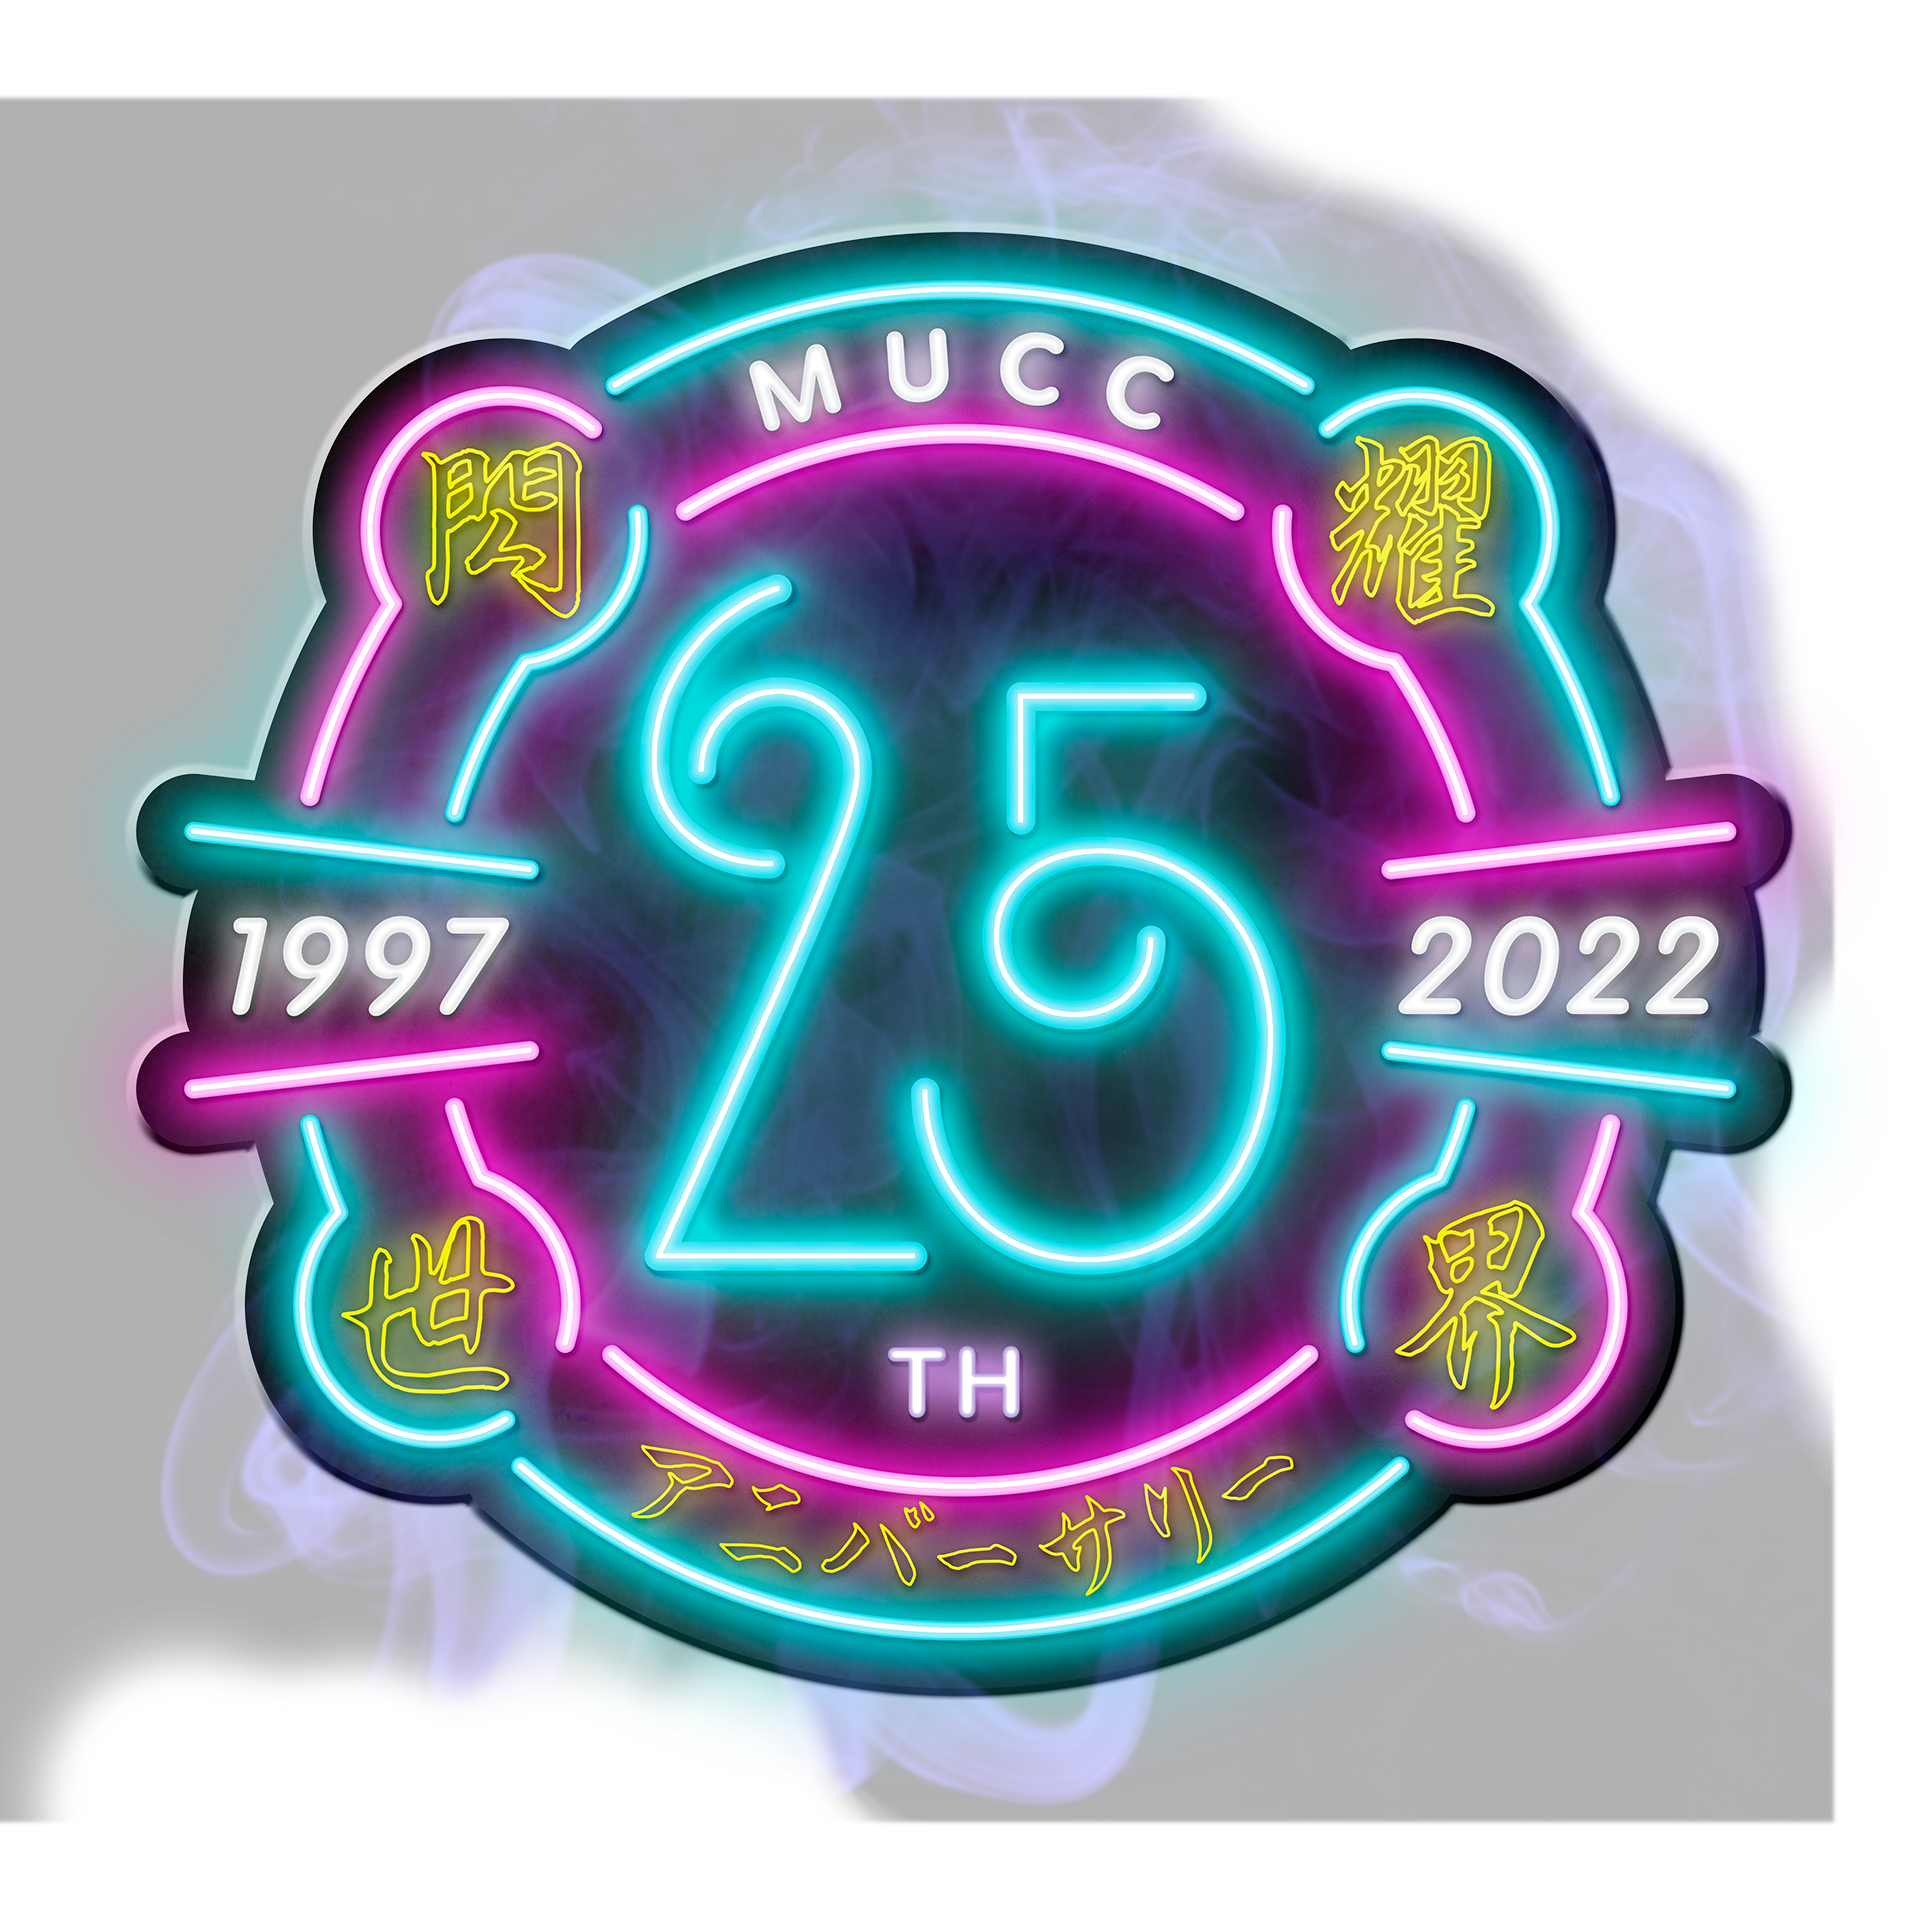 MUCC 25周年特設サイト